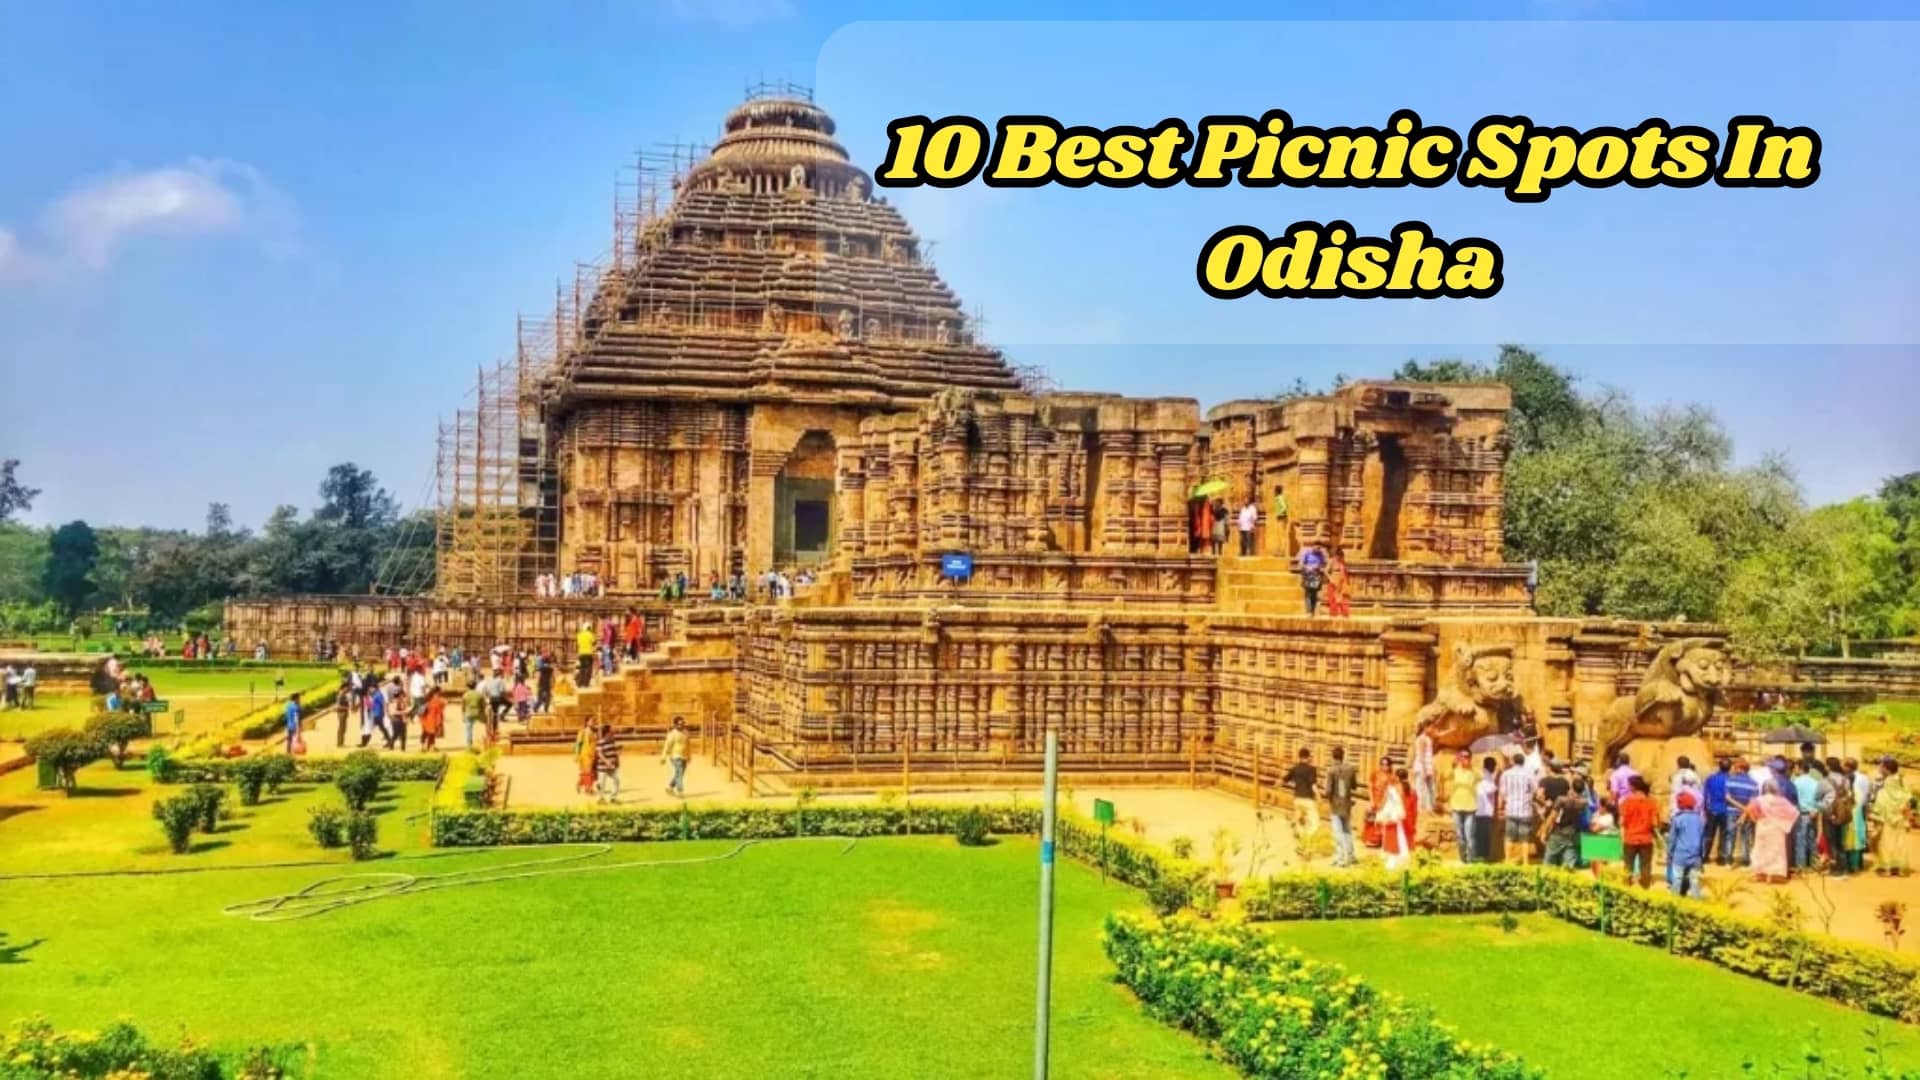 Picnic Spots In Odisha